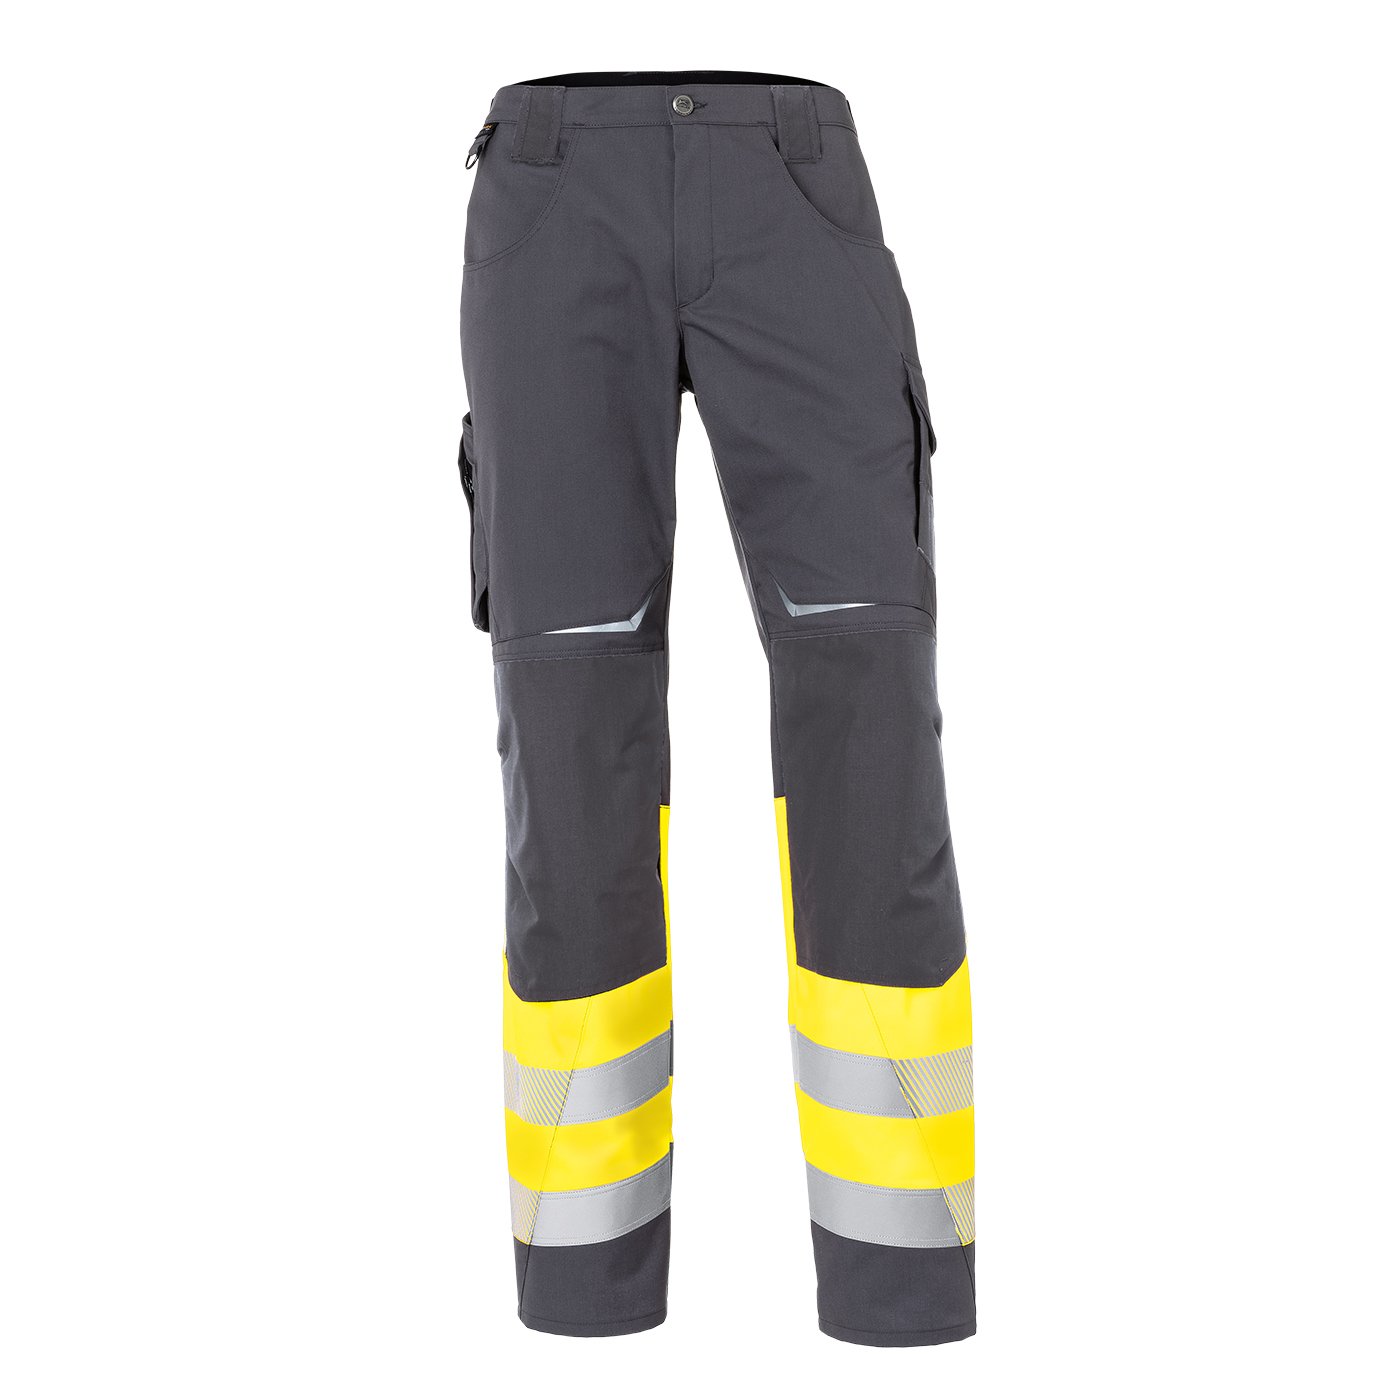 KÜBLER REFLECTIQ Hose | tuulzone | 1 | | Warnschutzhosen | Hosen Arbeitskleidung Arbeitsschutz Klasse